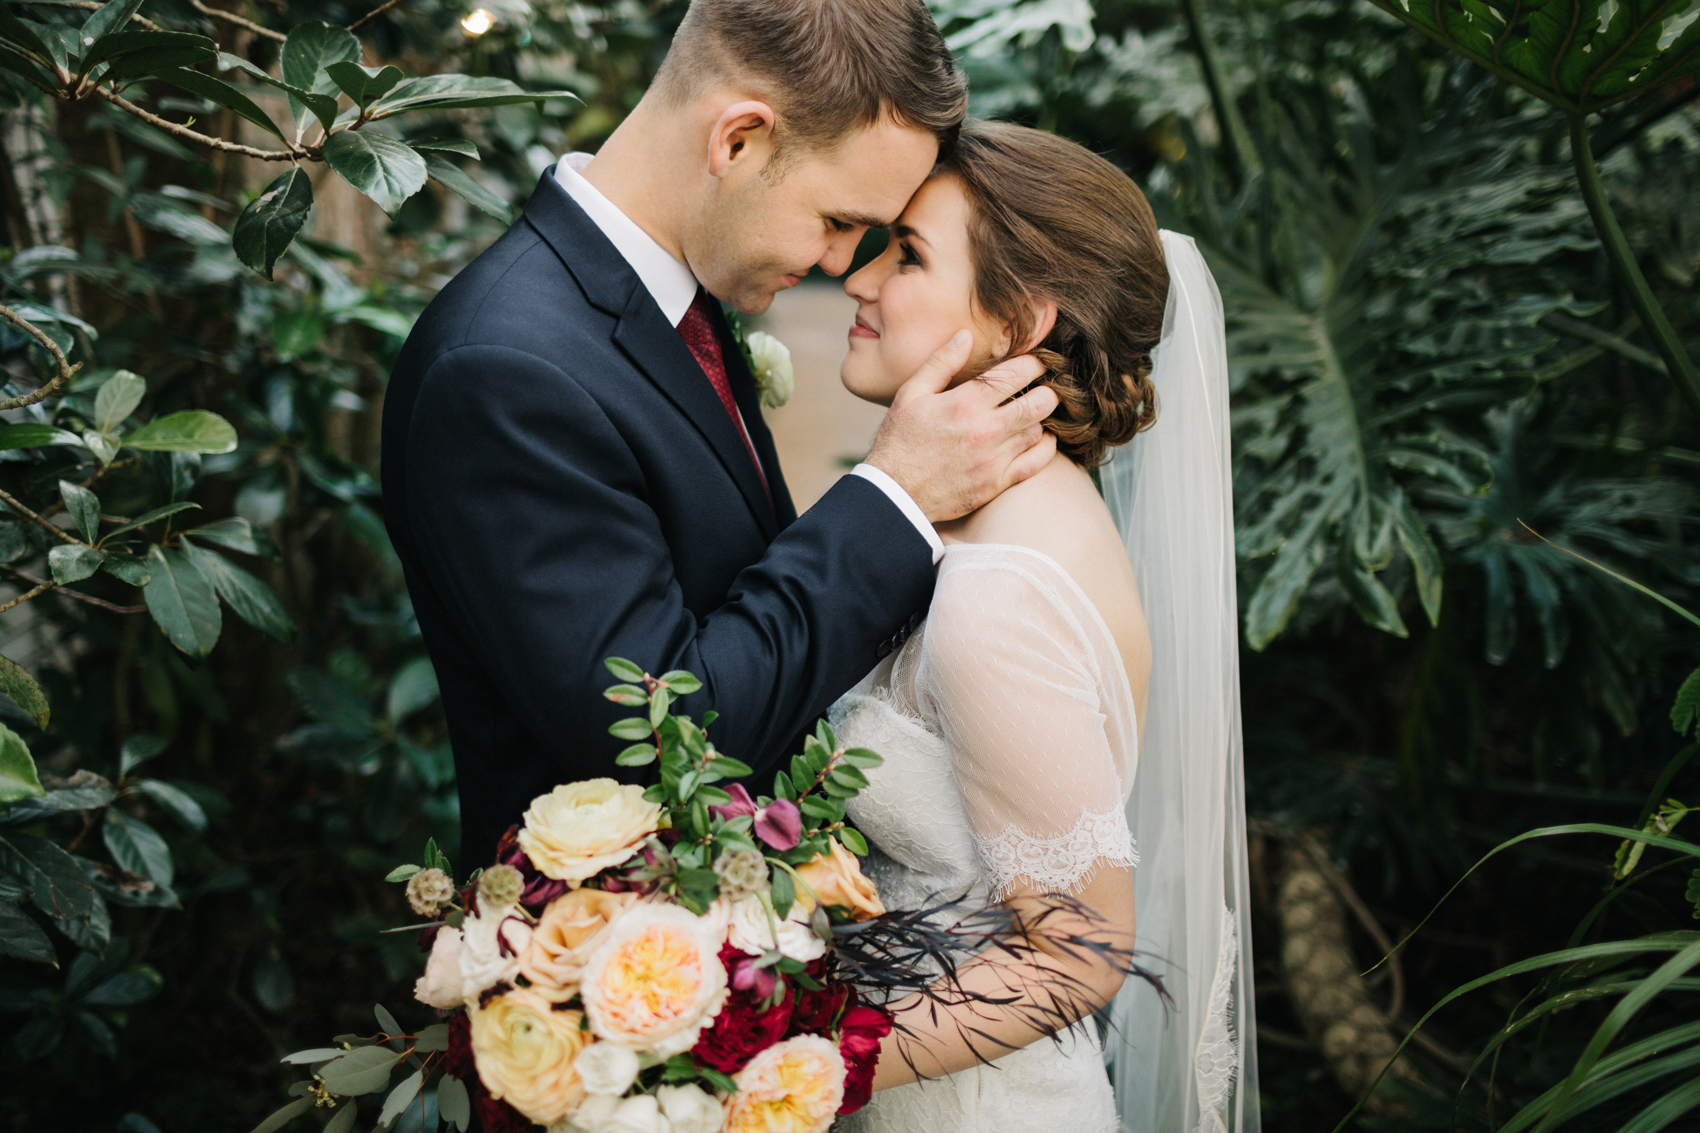 Orlando wedding photography specializing in romantic outdoor weddings